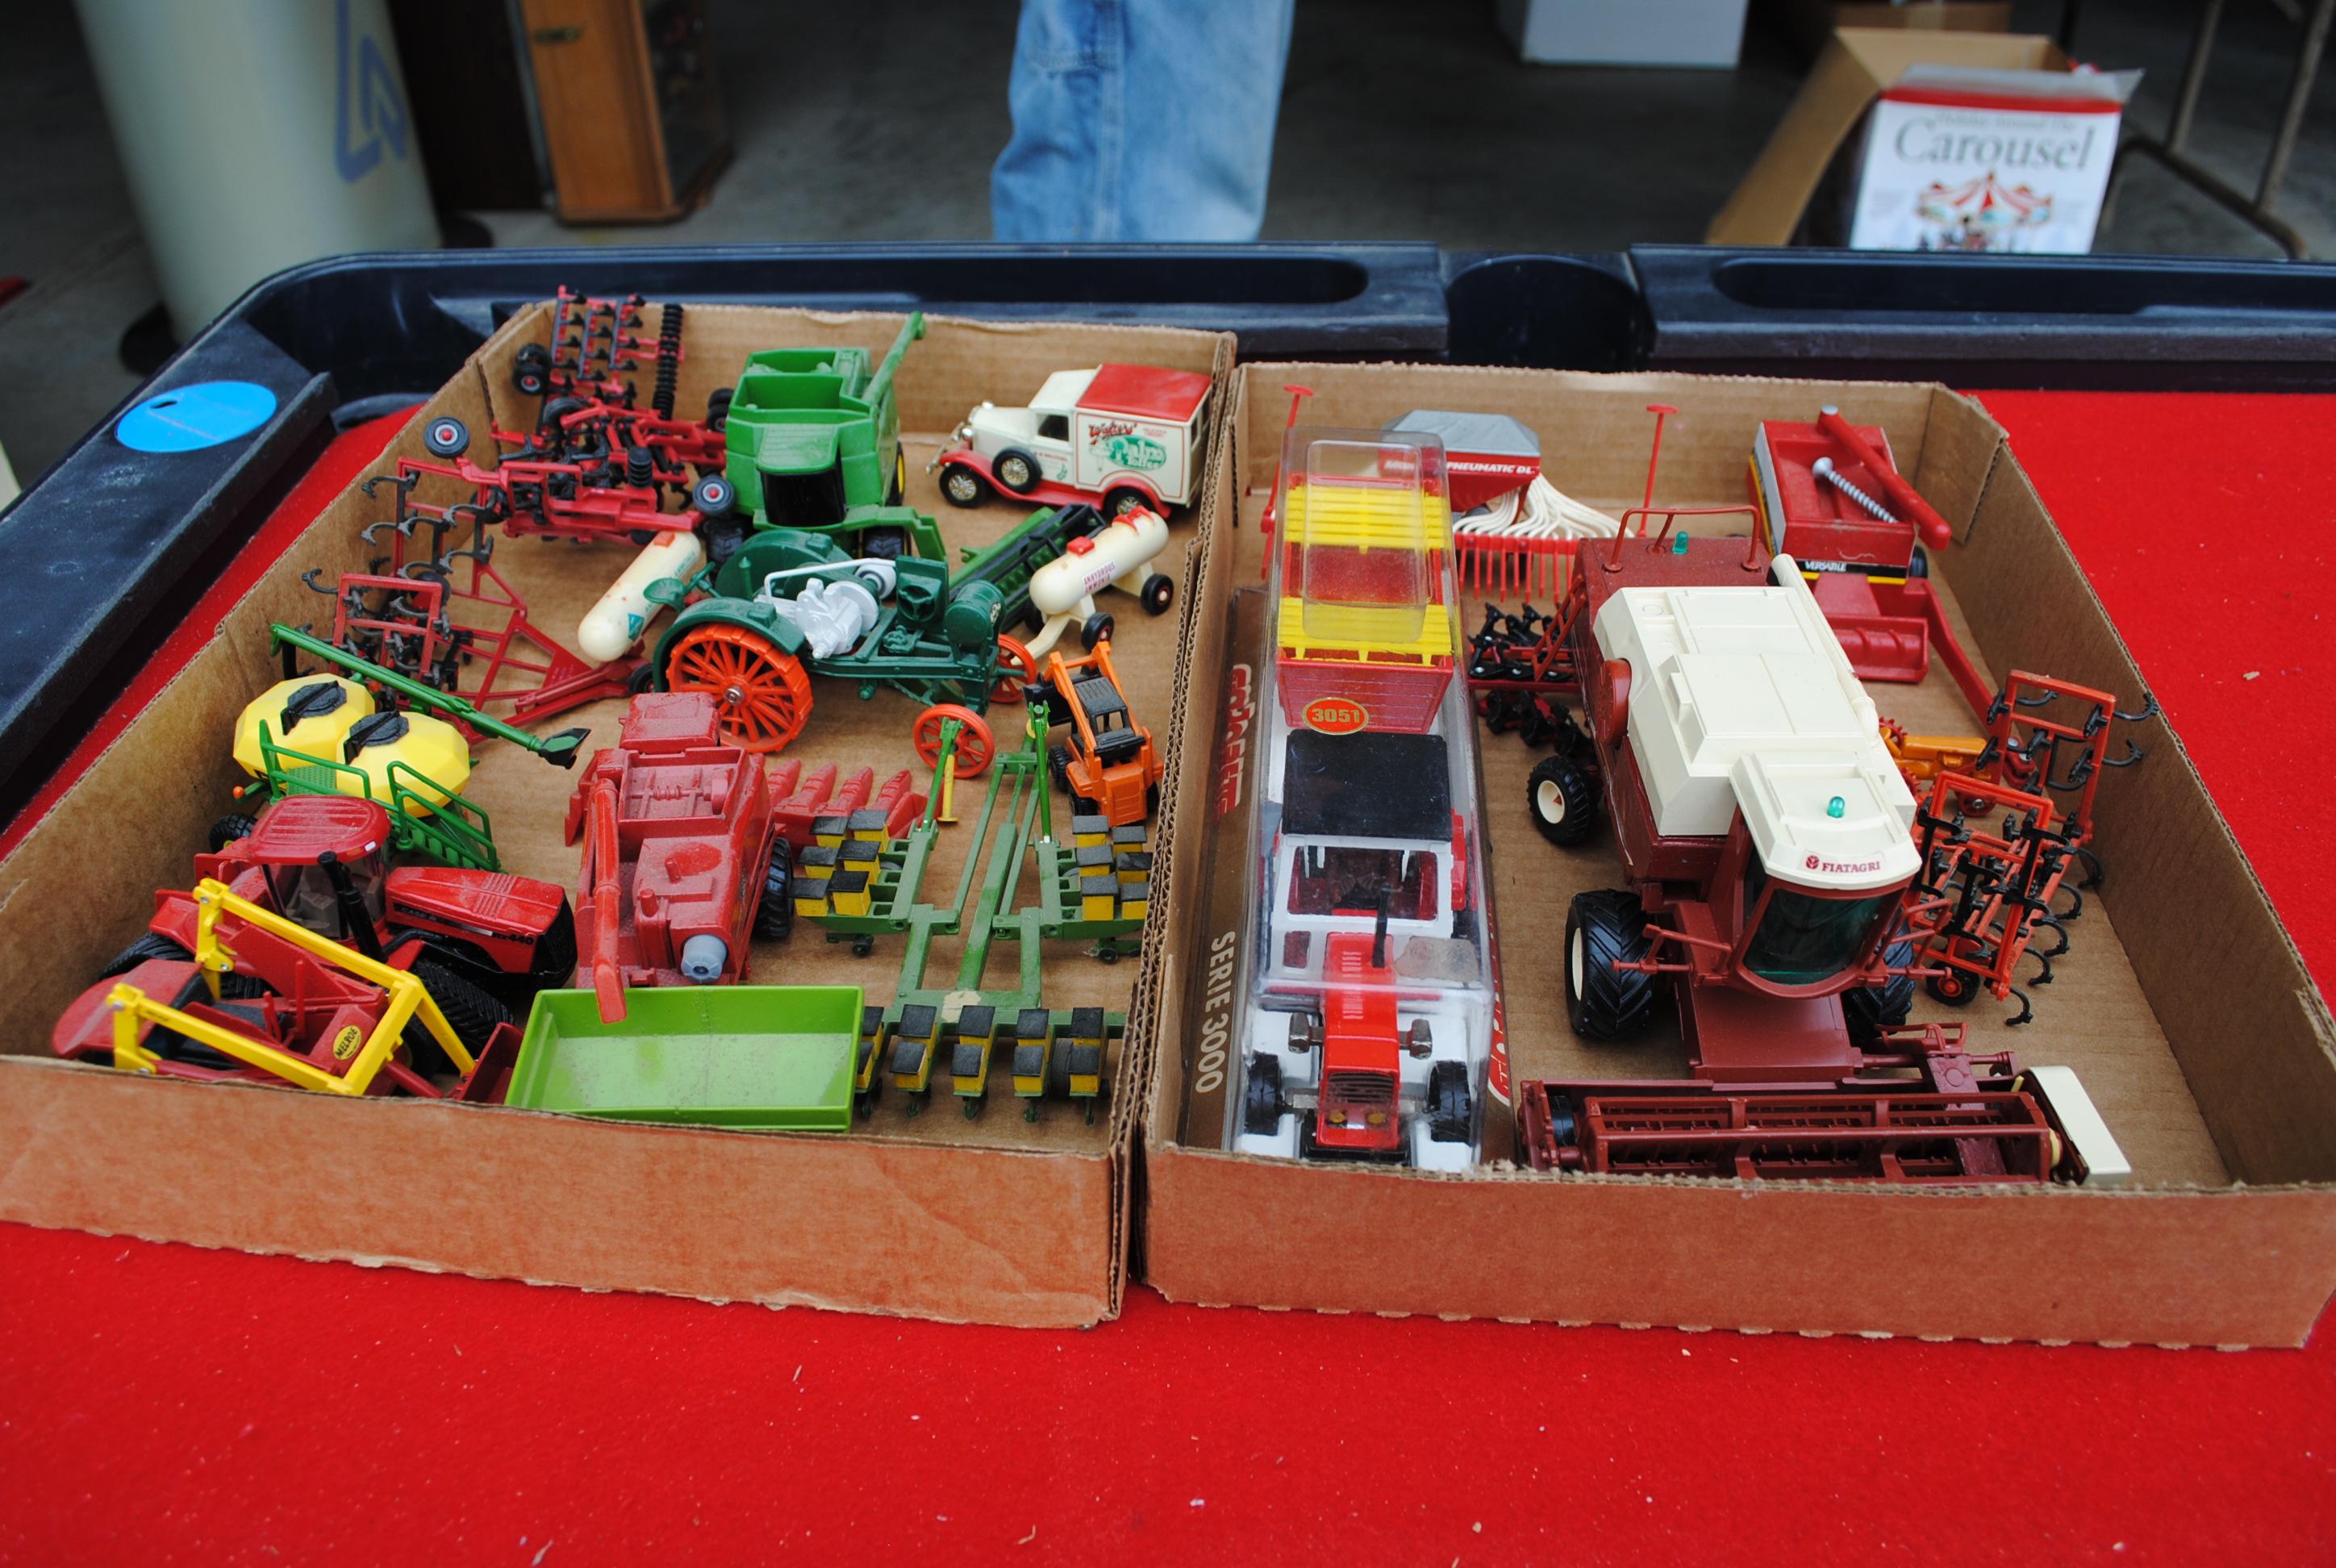 2 Boxes including John Deere Fiatagri, Case, Melroe, Versatile, tractors, combines, implements